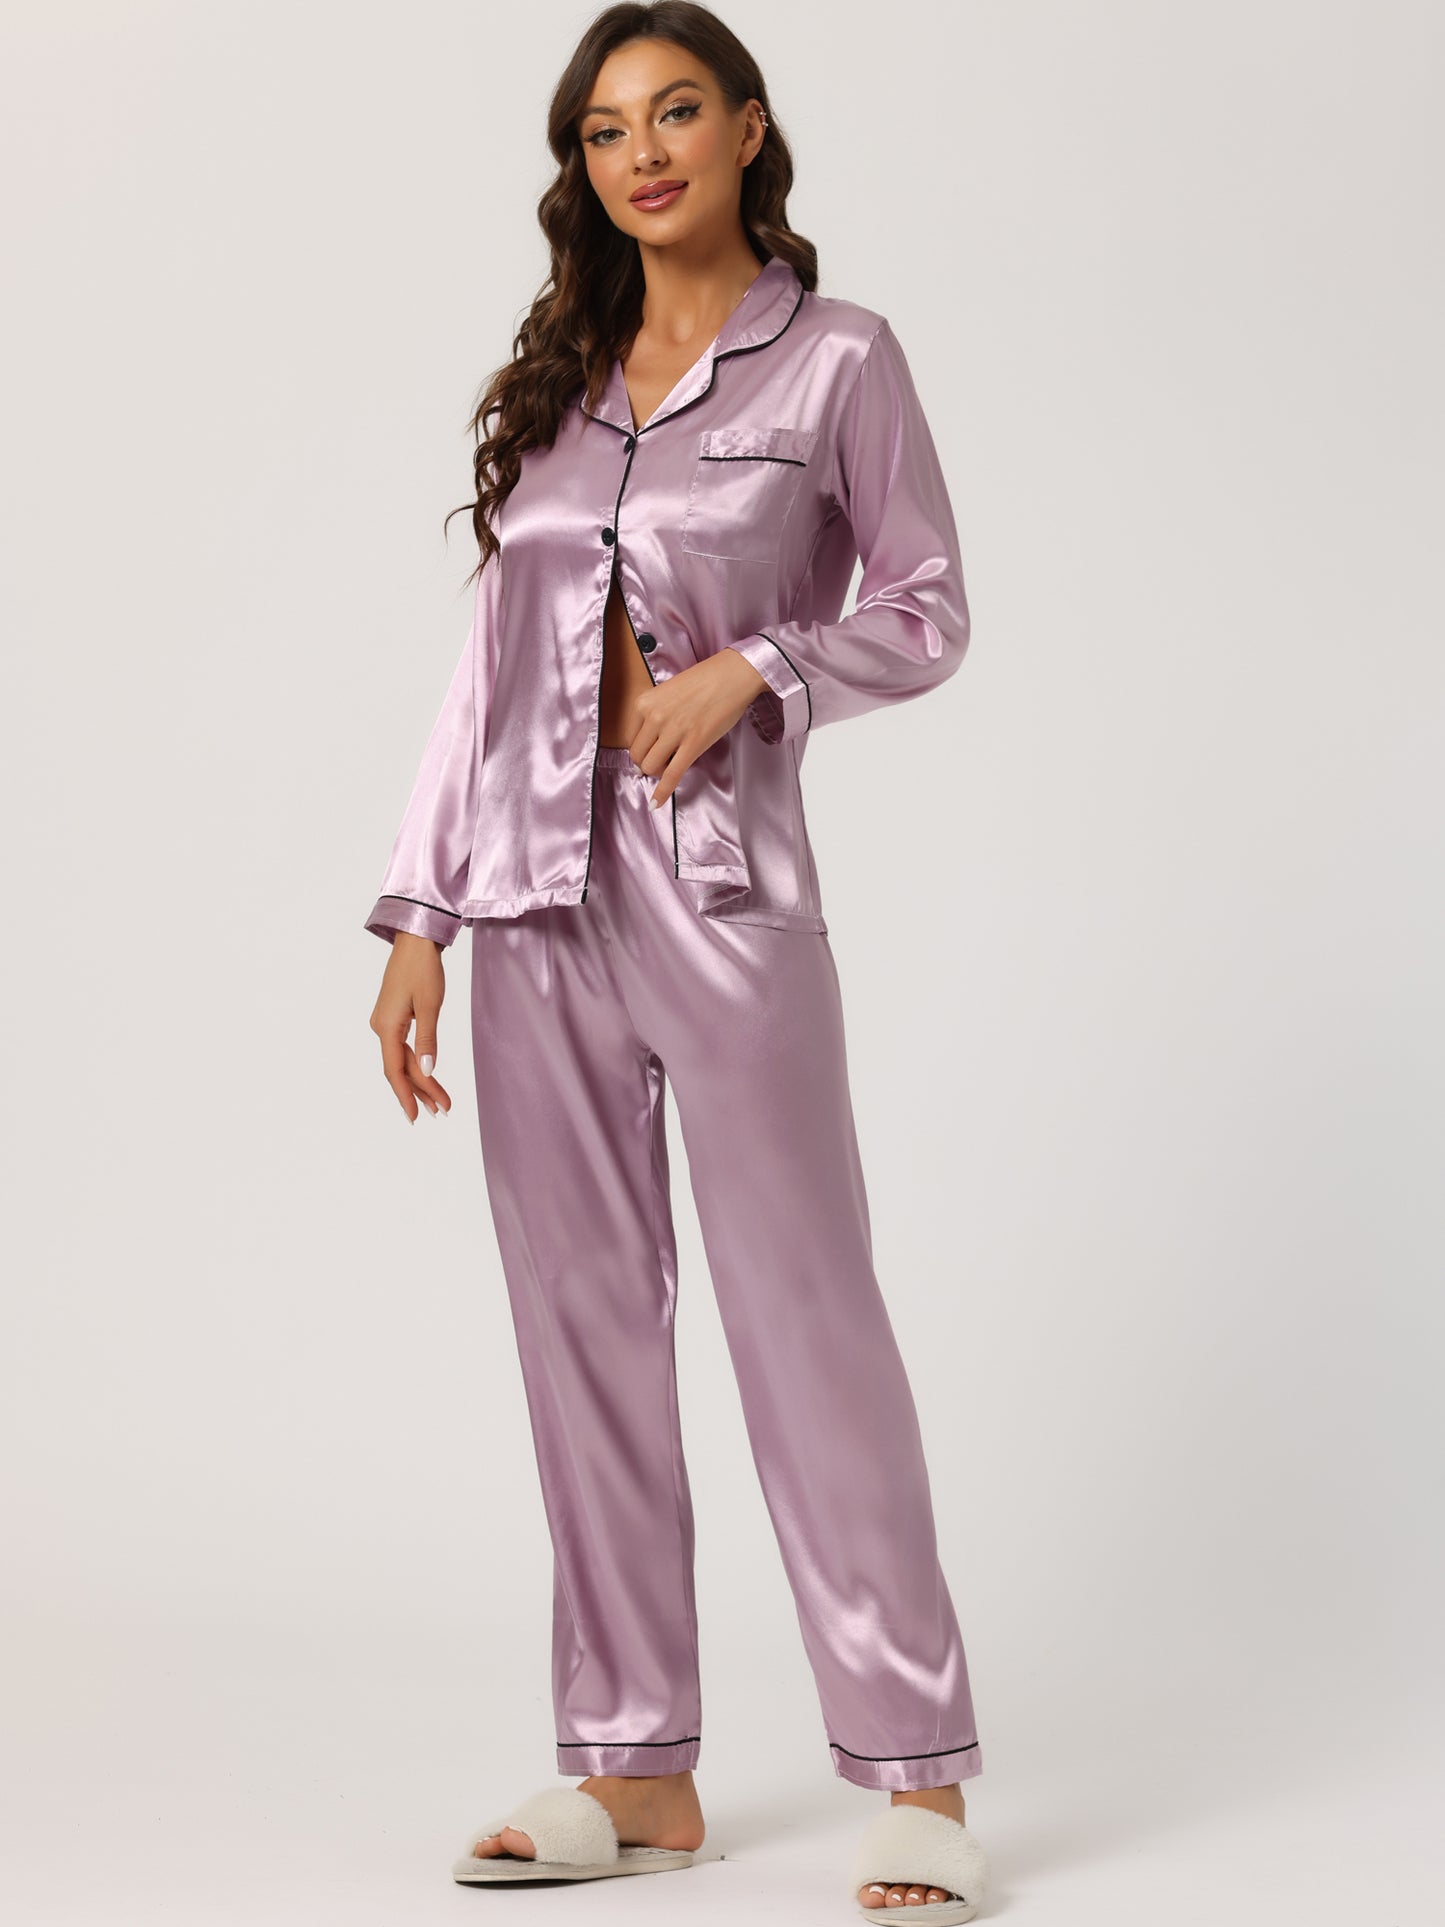 cheibear Pajama Sets Sleepwear Button Down Night Suit Lounge Sets Light Purple